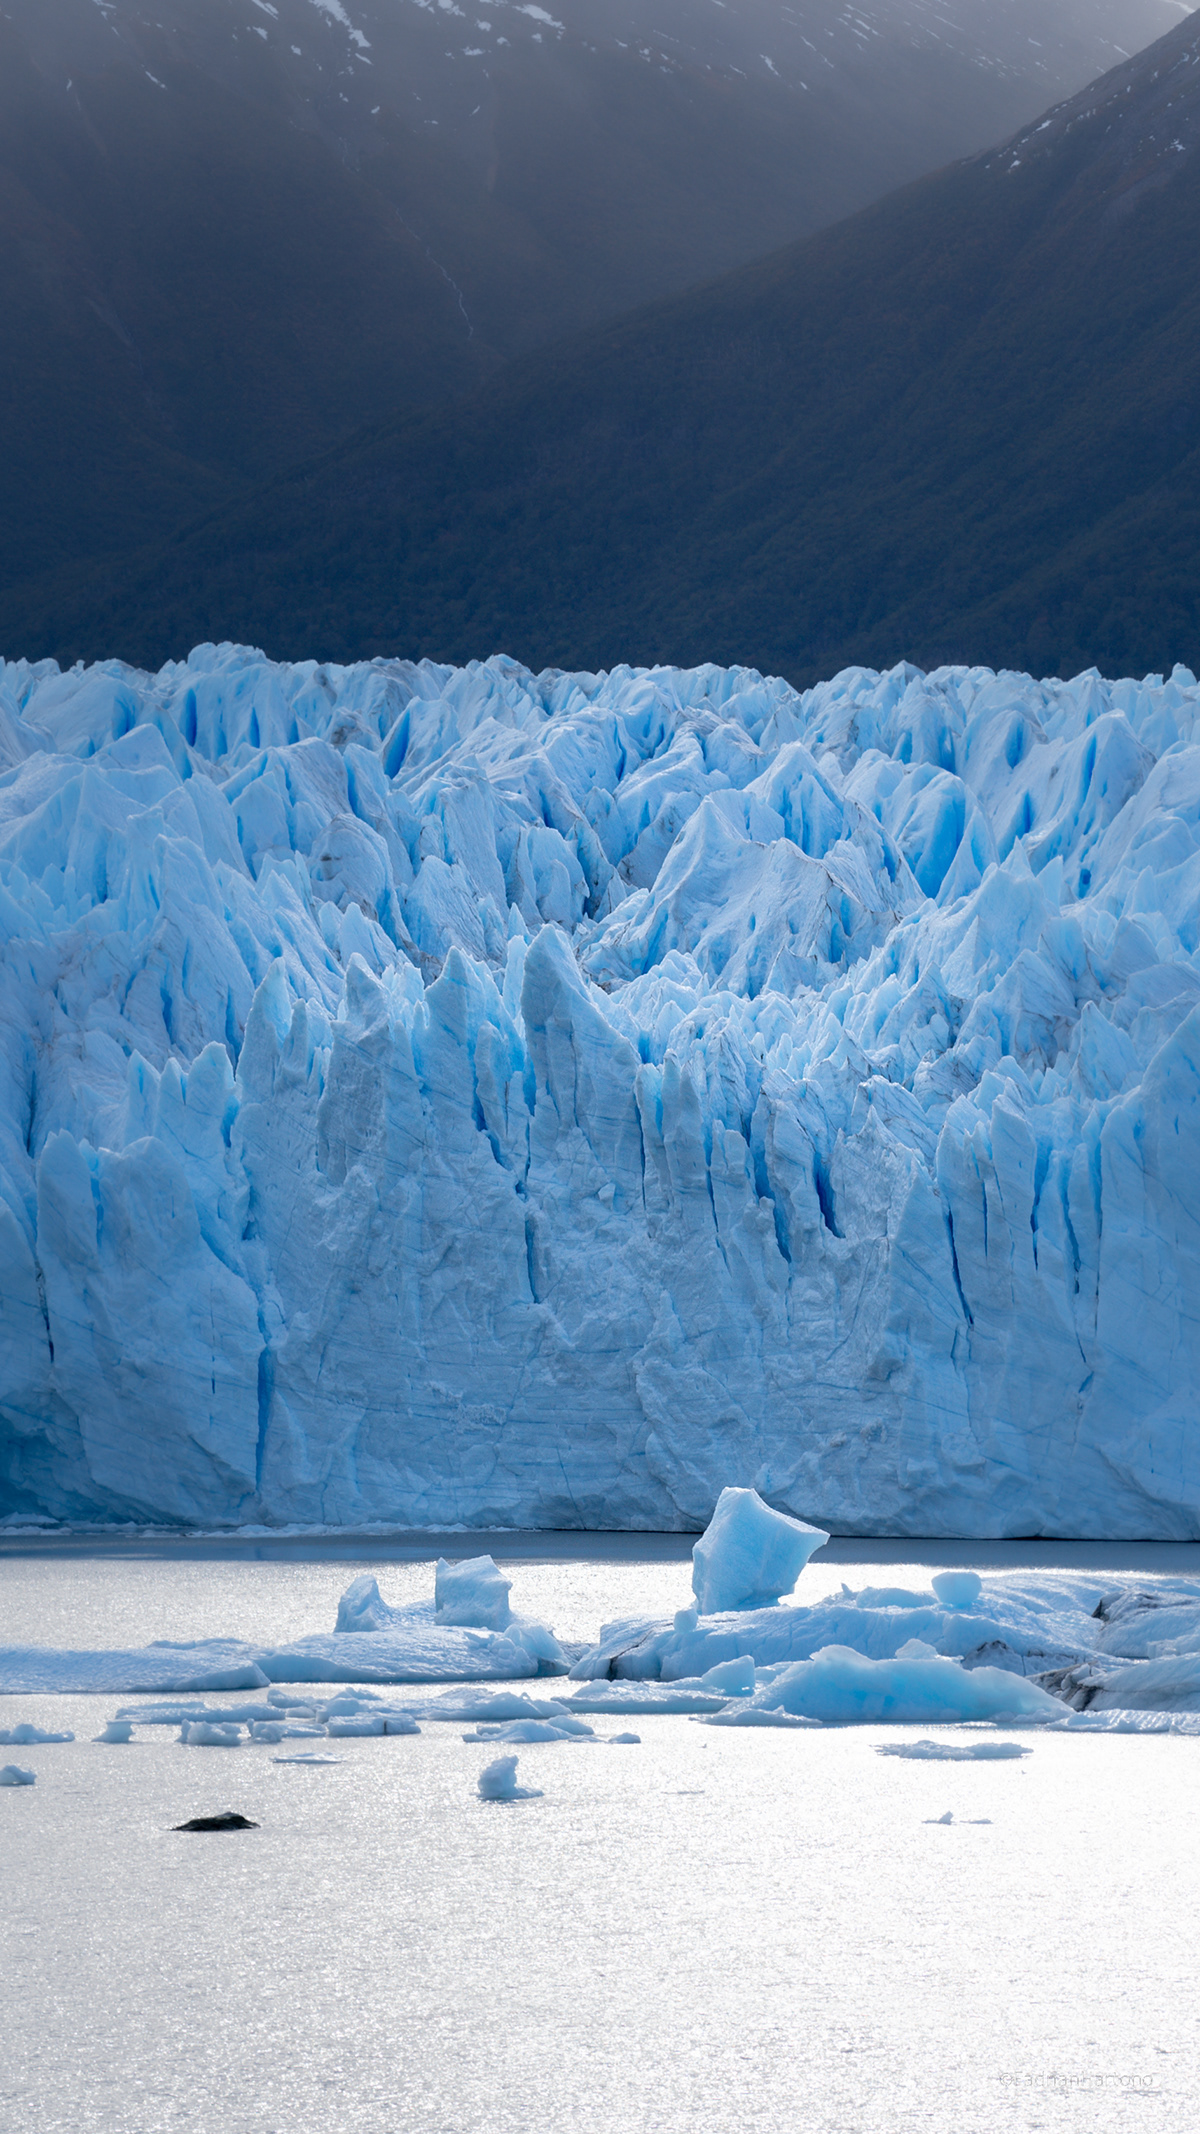 lightroom Photography  patagonia argentina glacier Nature Landscape mountains lakes Travel